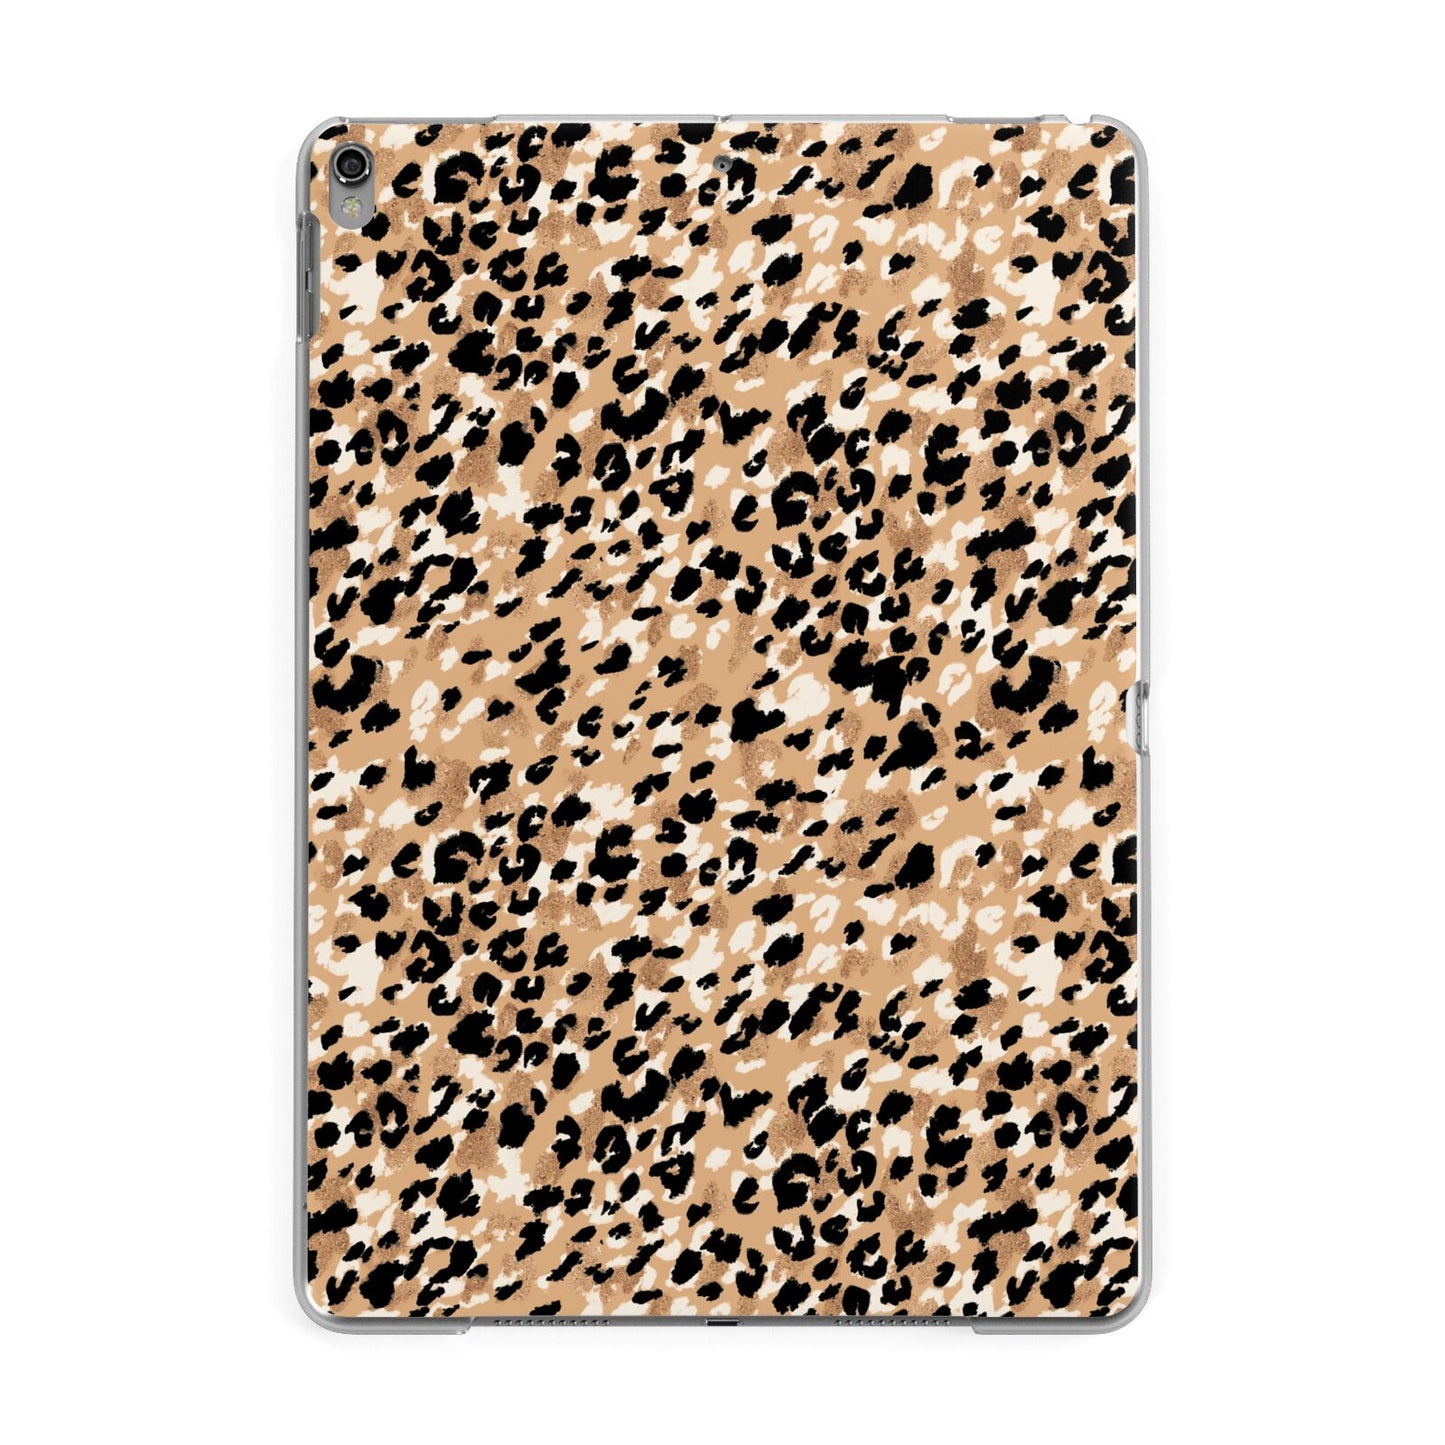 Leopard Print Apple iPad Grey Case